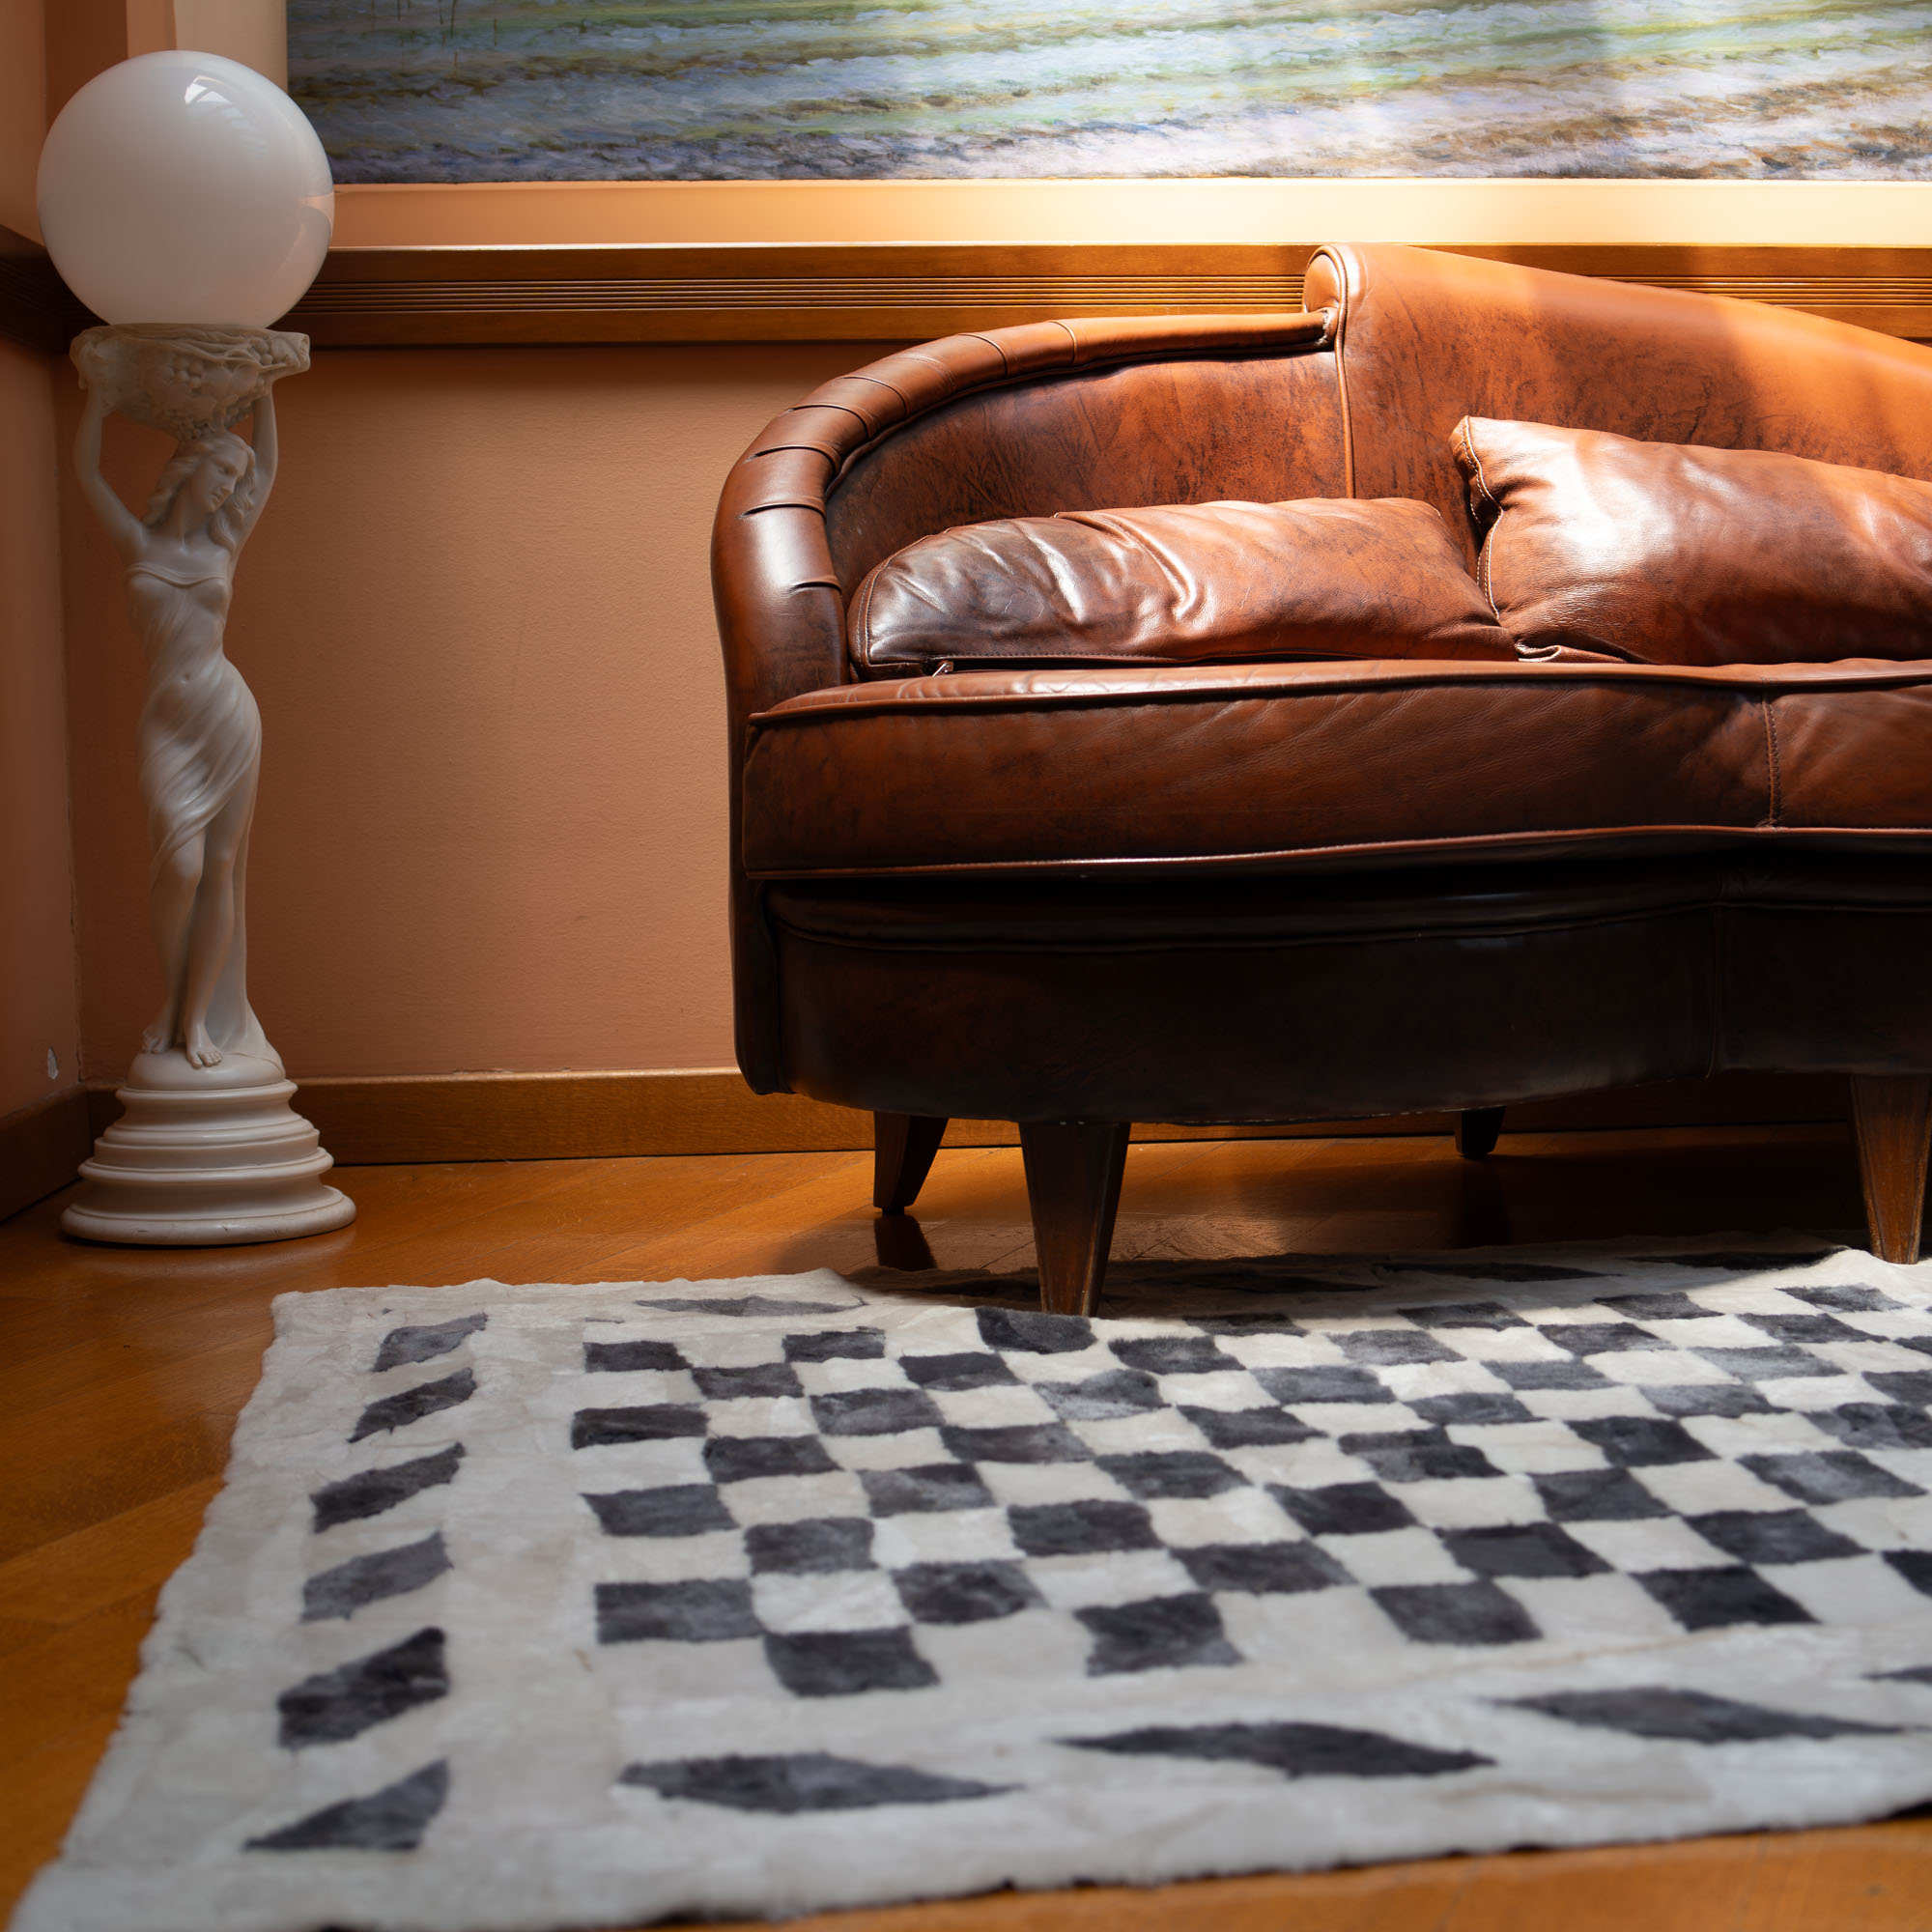 Sheep fur carpet in a gray chess pattern